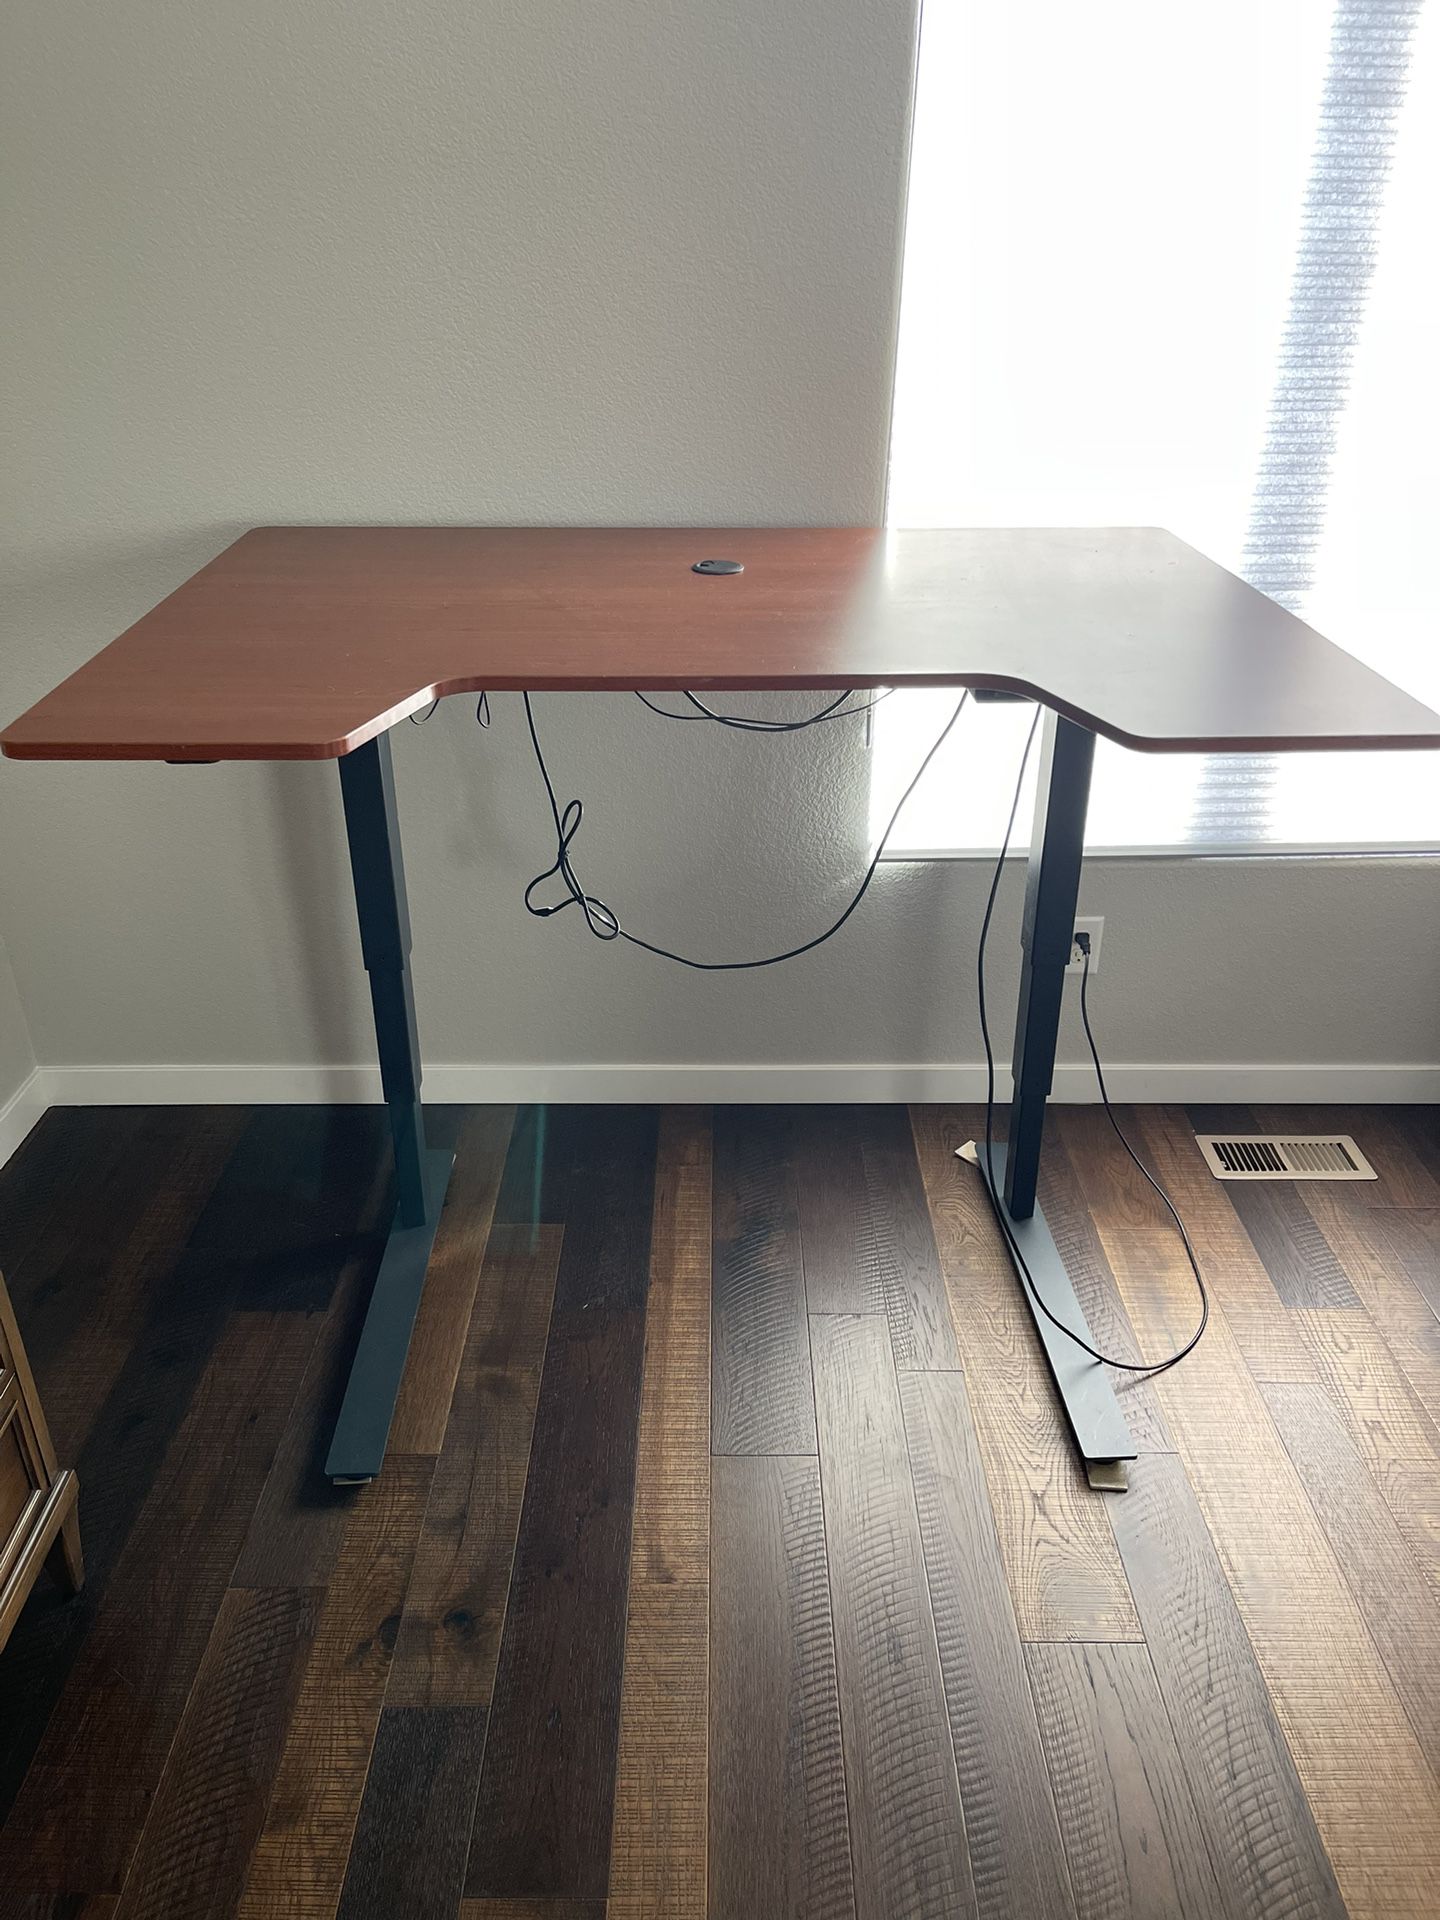 SPFE Electric, Motorized, Adjustable Standing-Desk